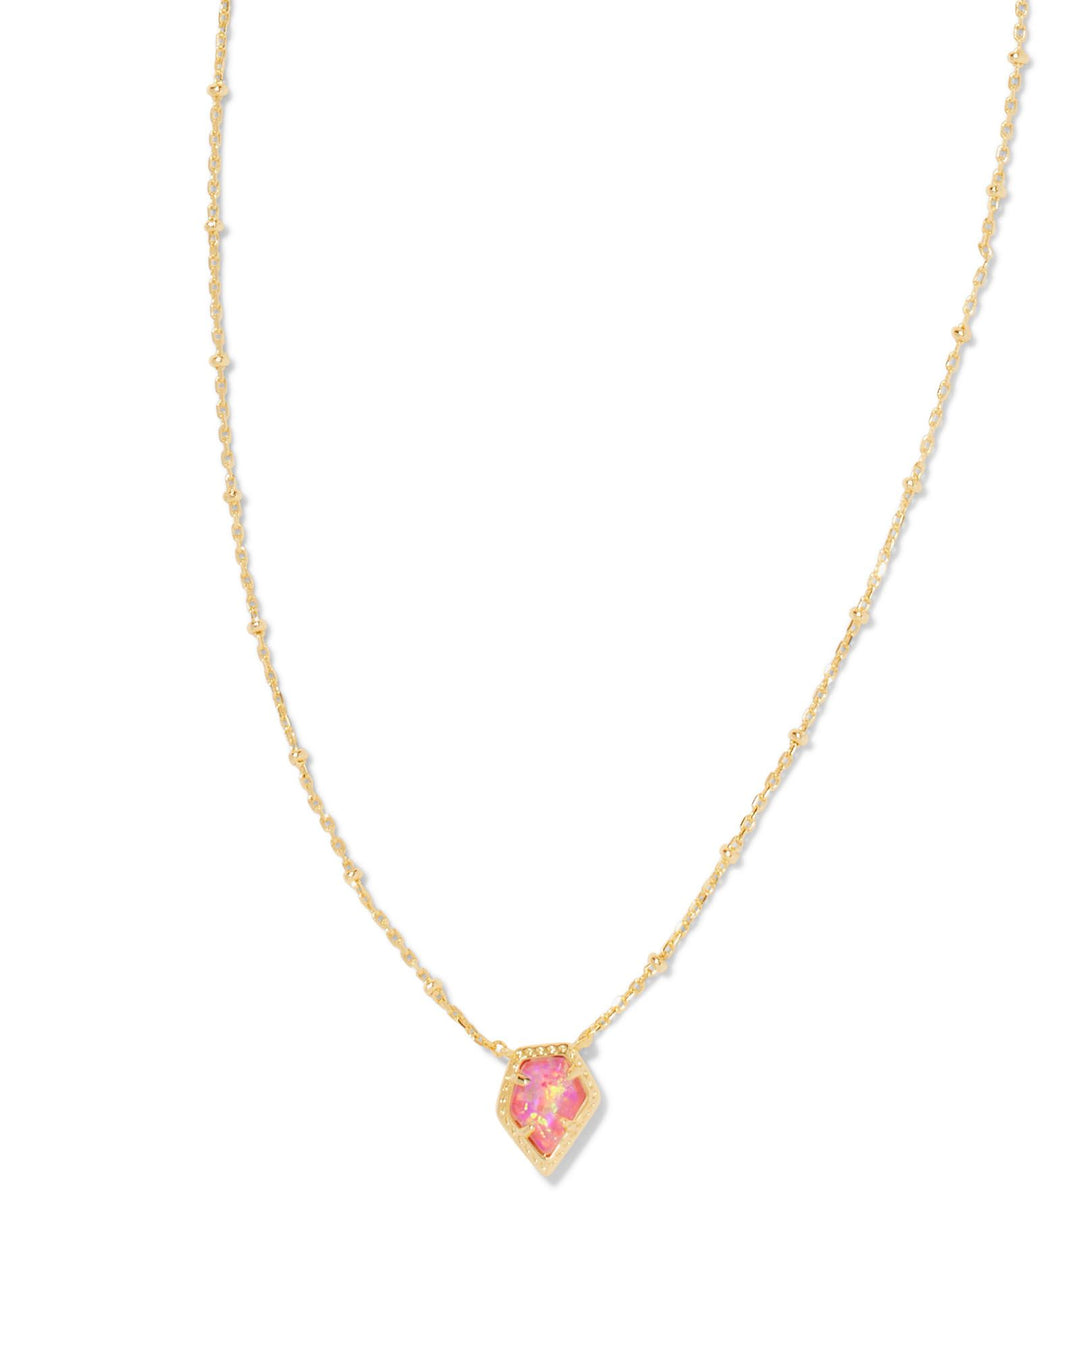 Kendra Scott Tess Satellite Pendant Necklace in Rose Pink Opal